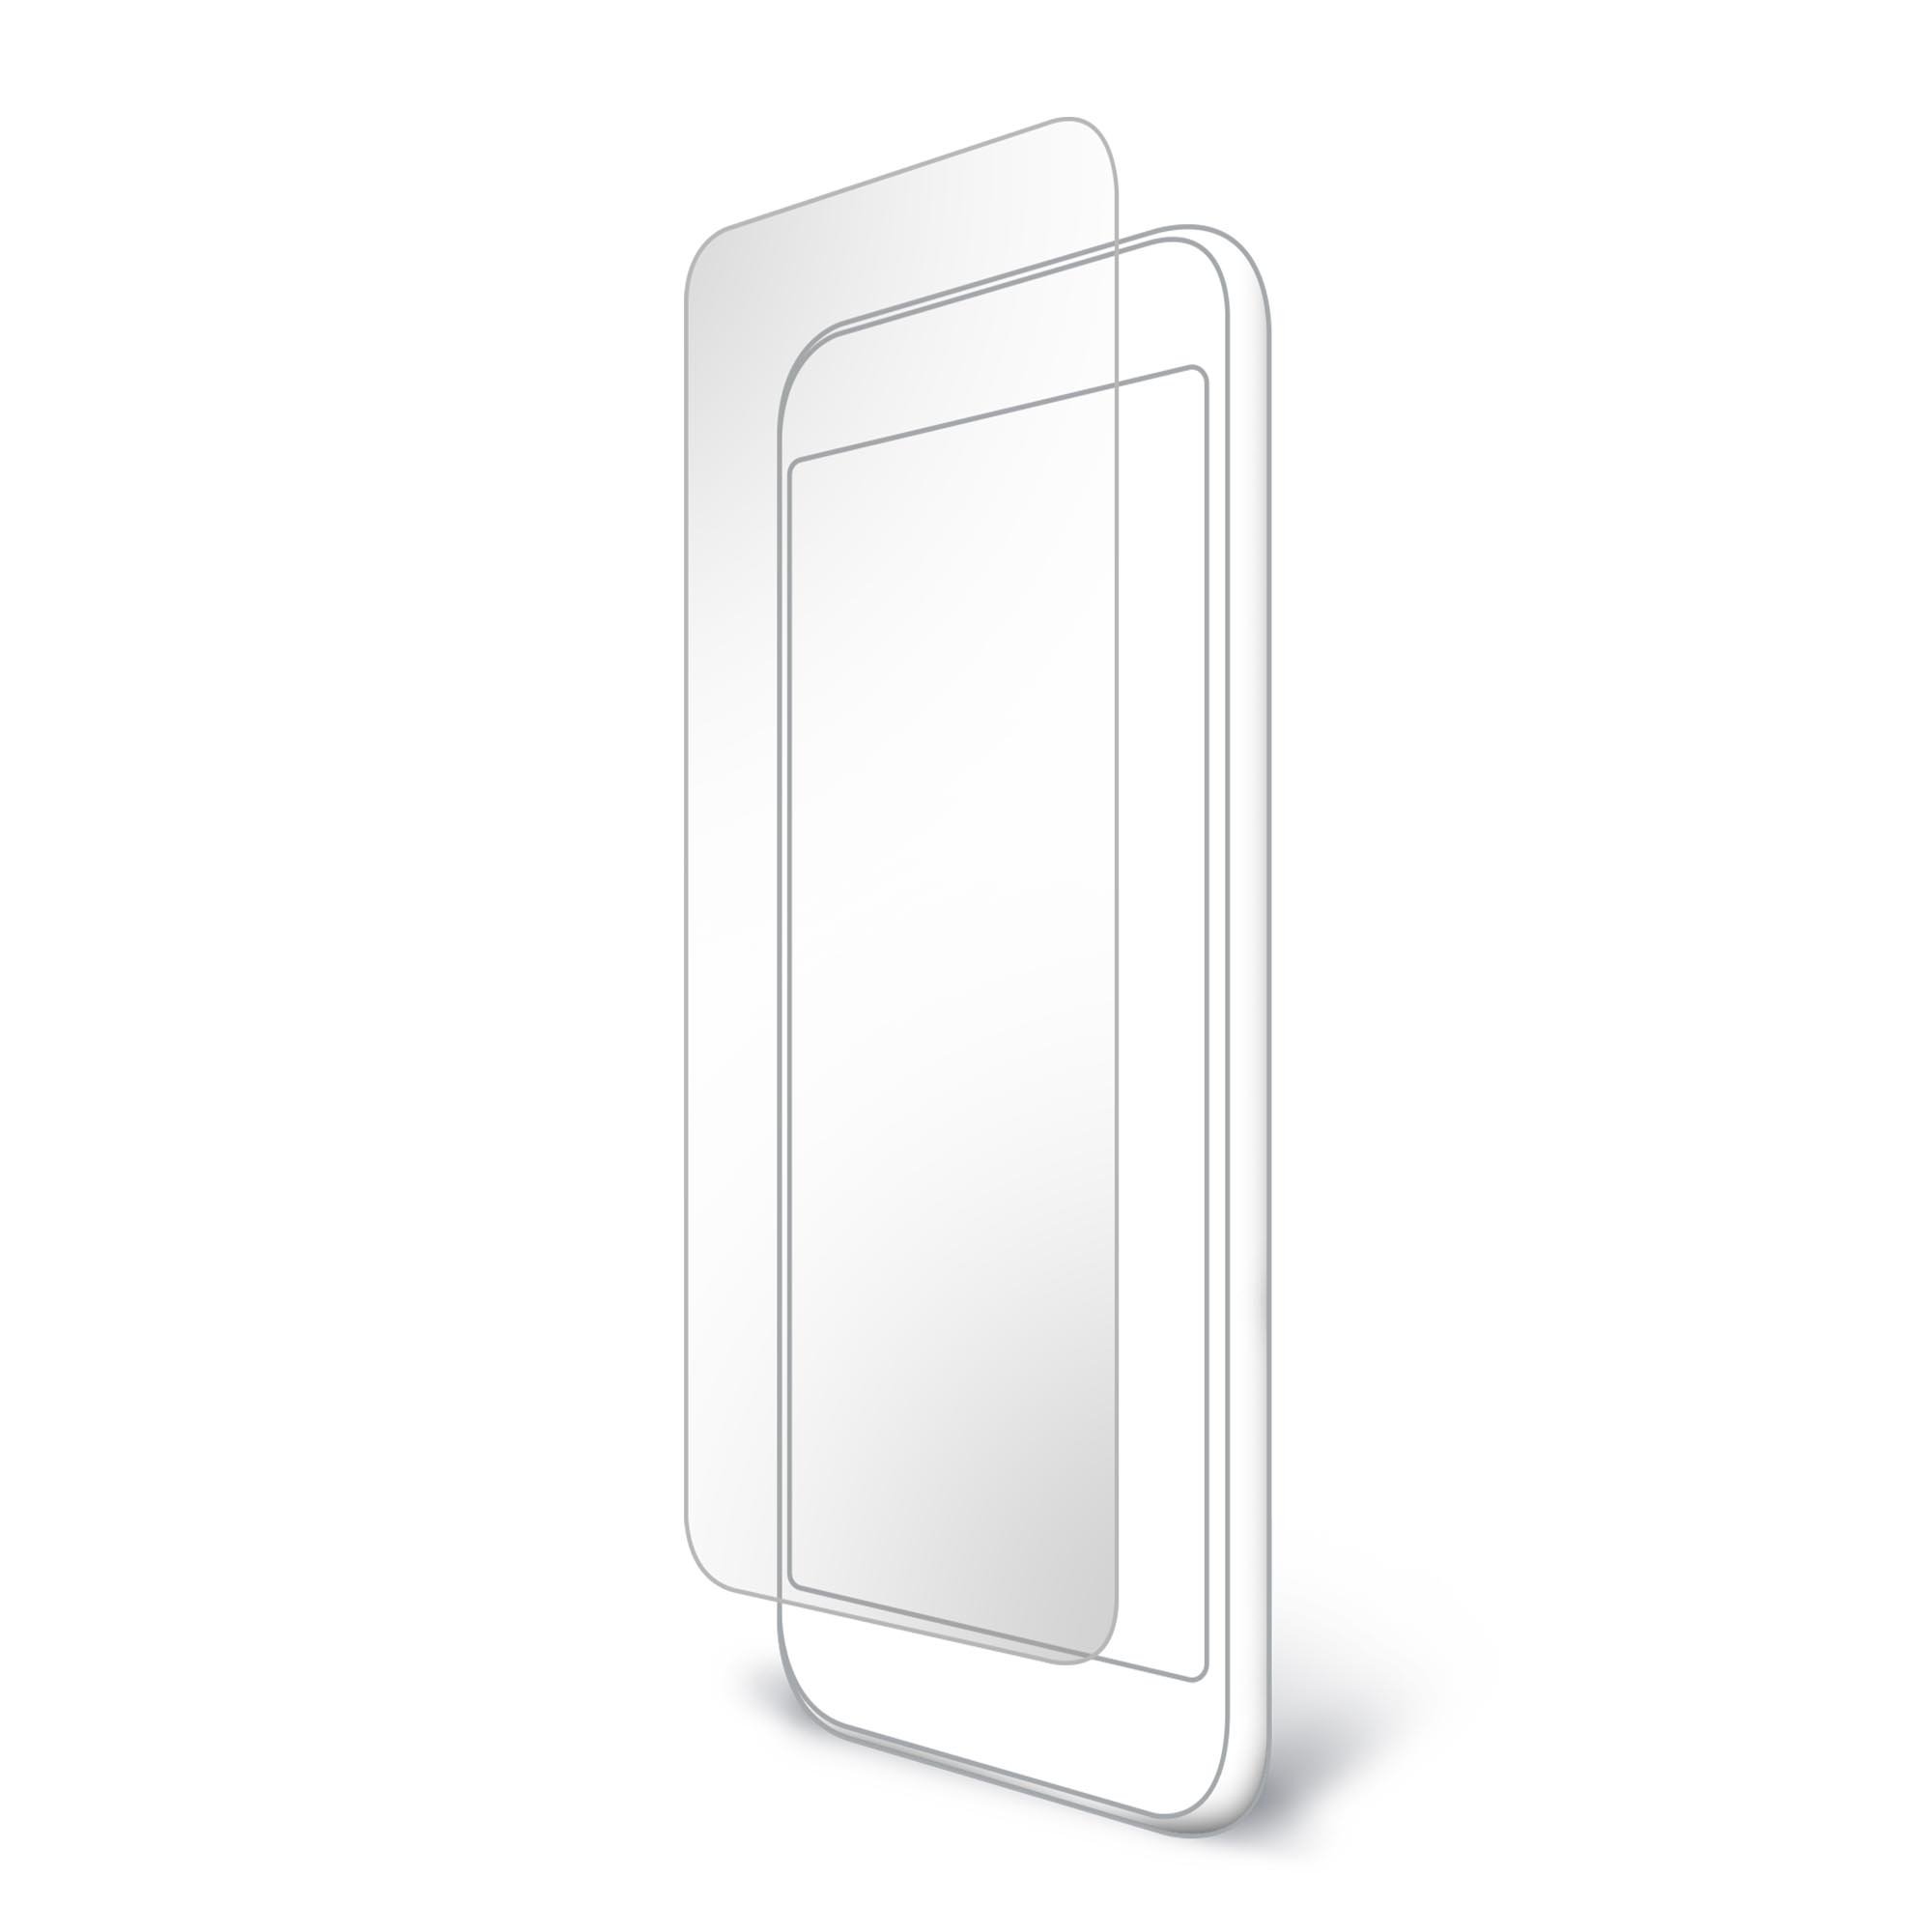 Stylo 5/5+ LG G8 ThinQ Screen Protectors, Cases & Skins | BodyGuardz®